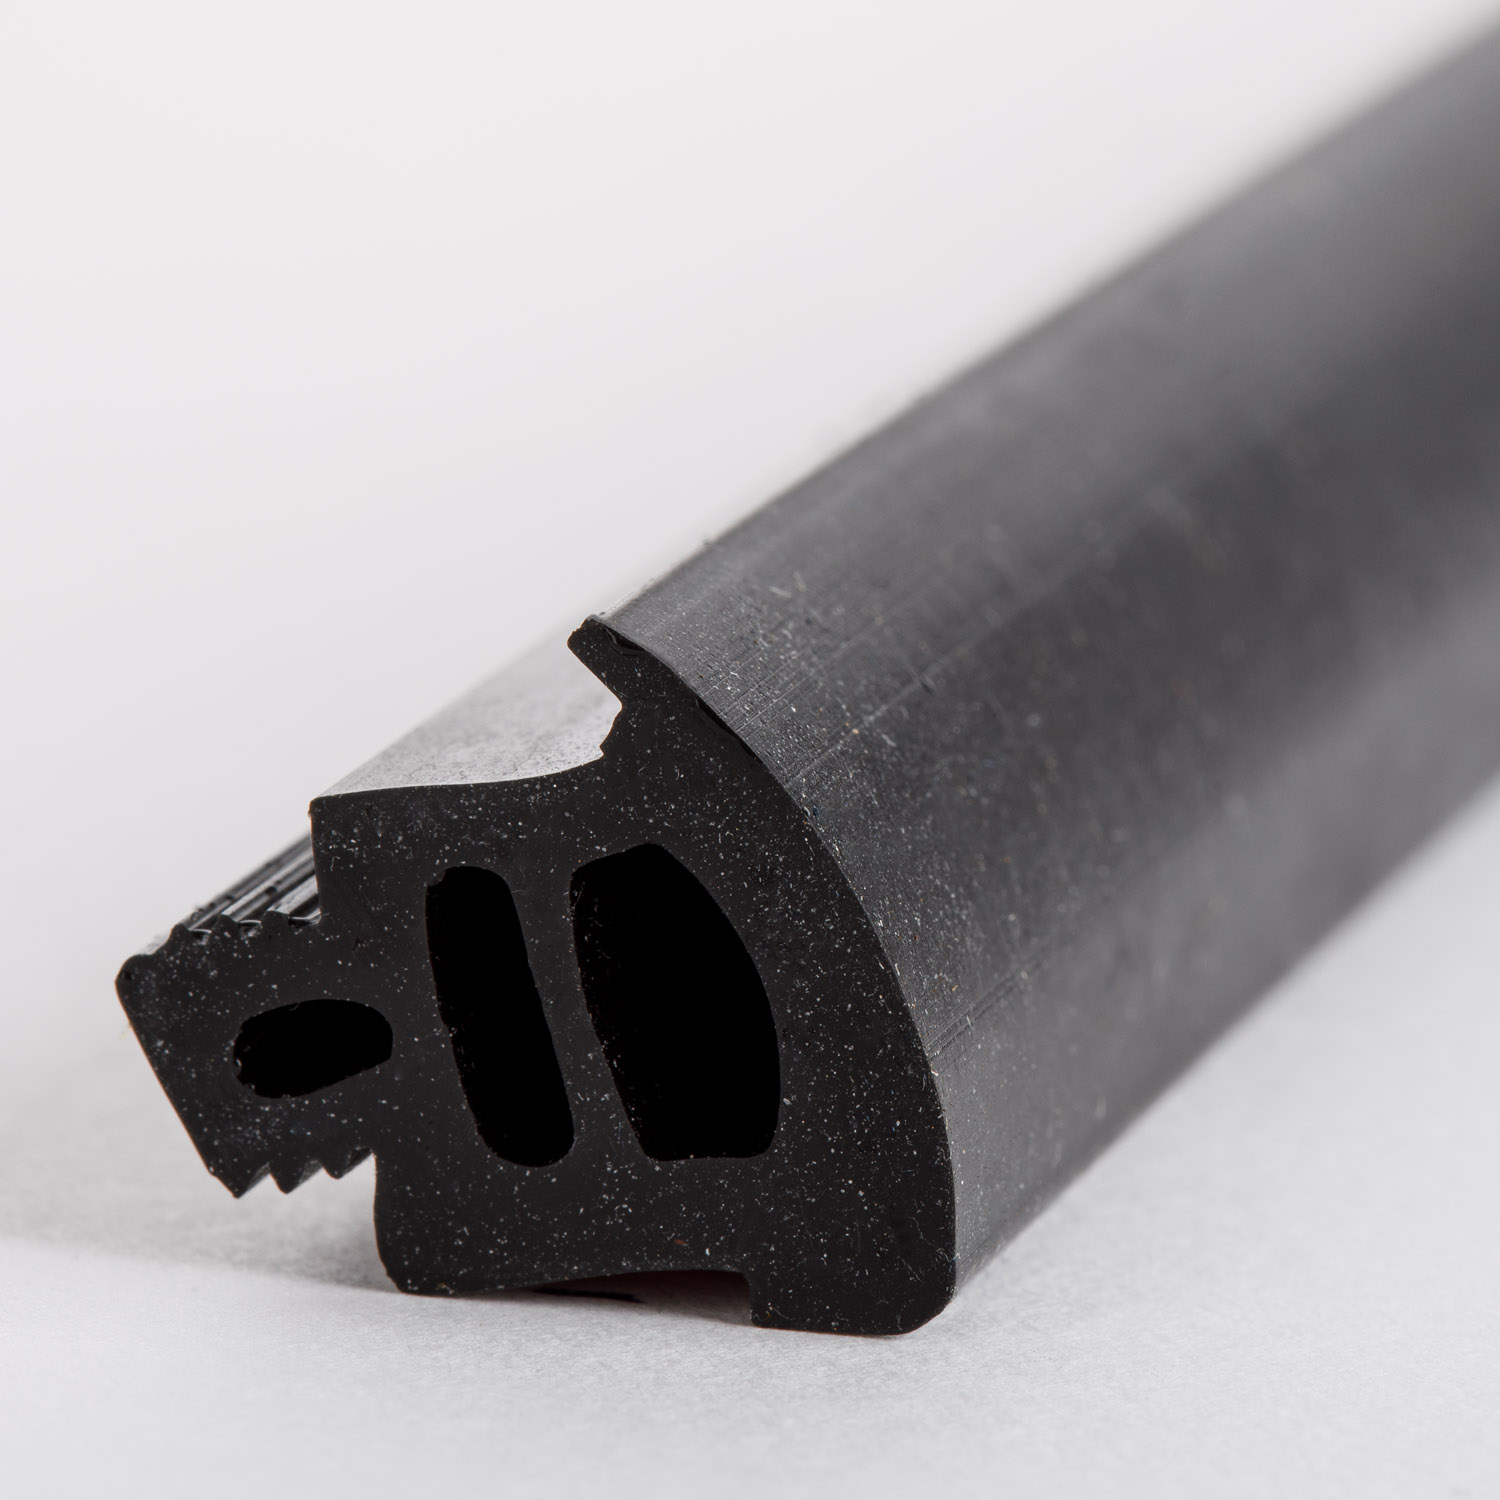 Detail of black hard rubber weld strip